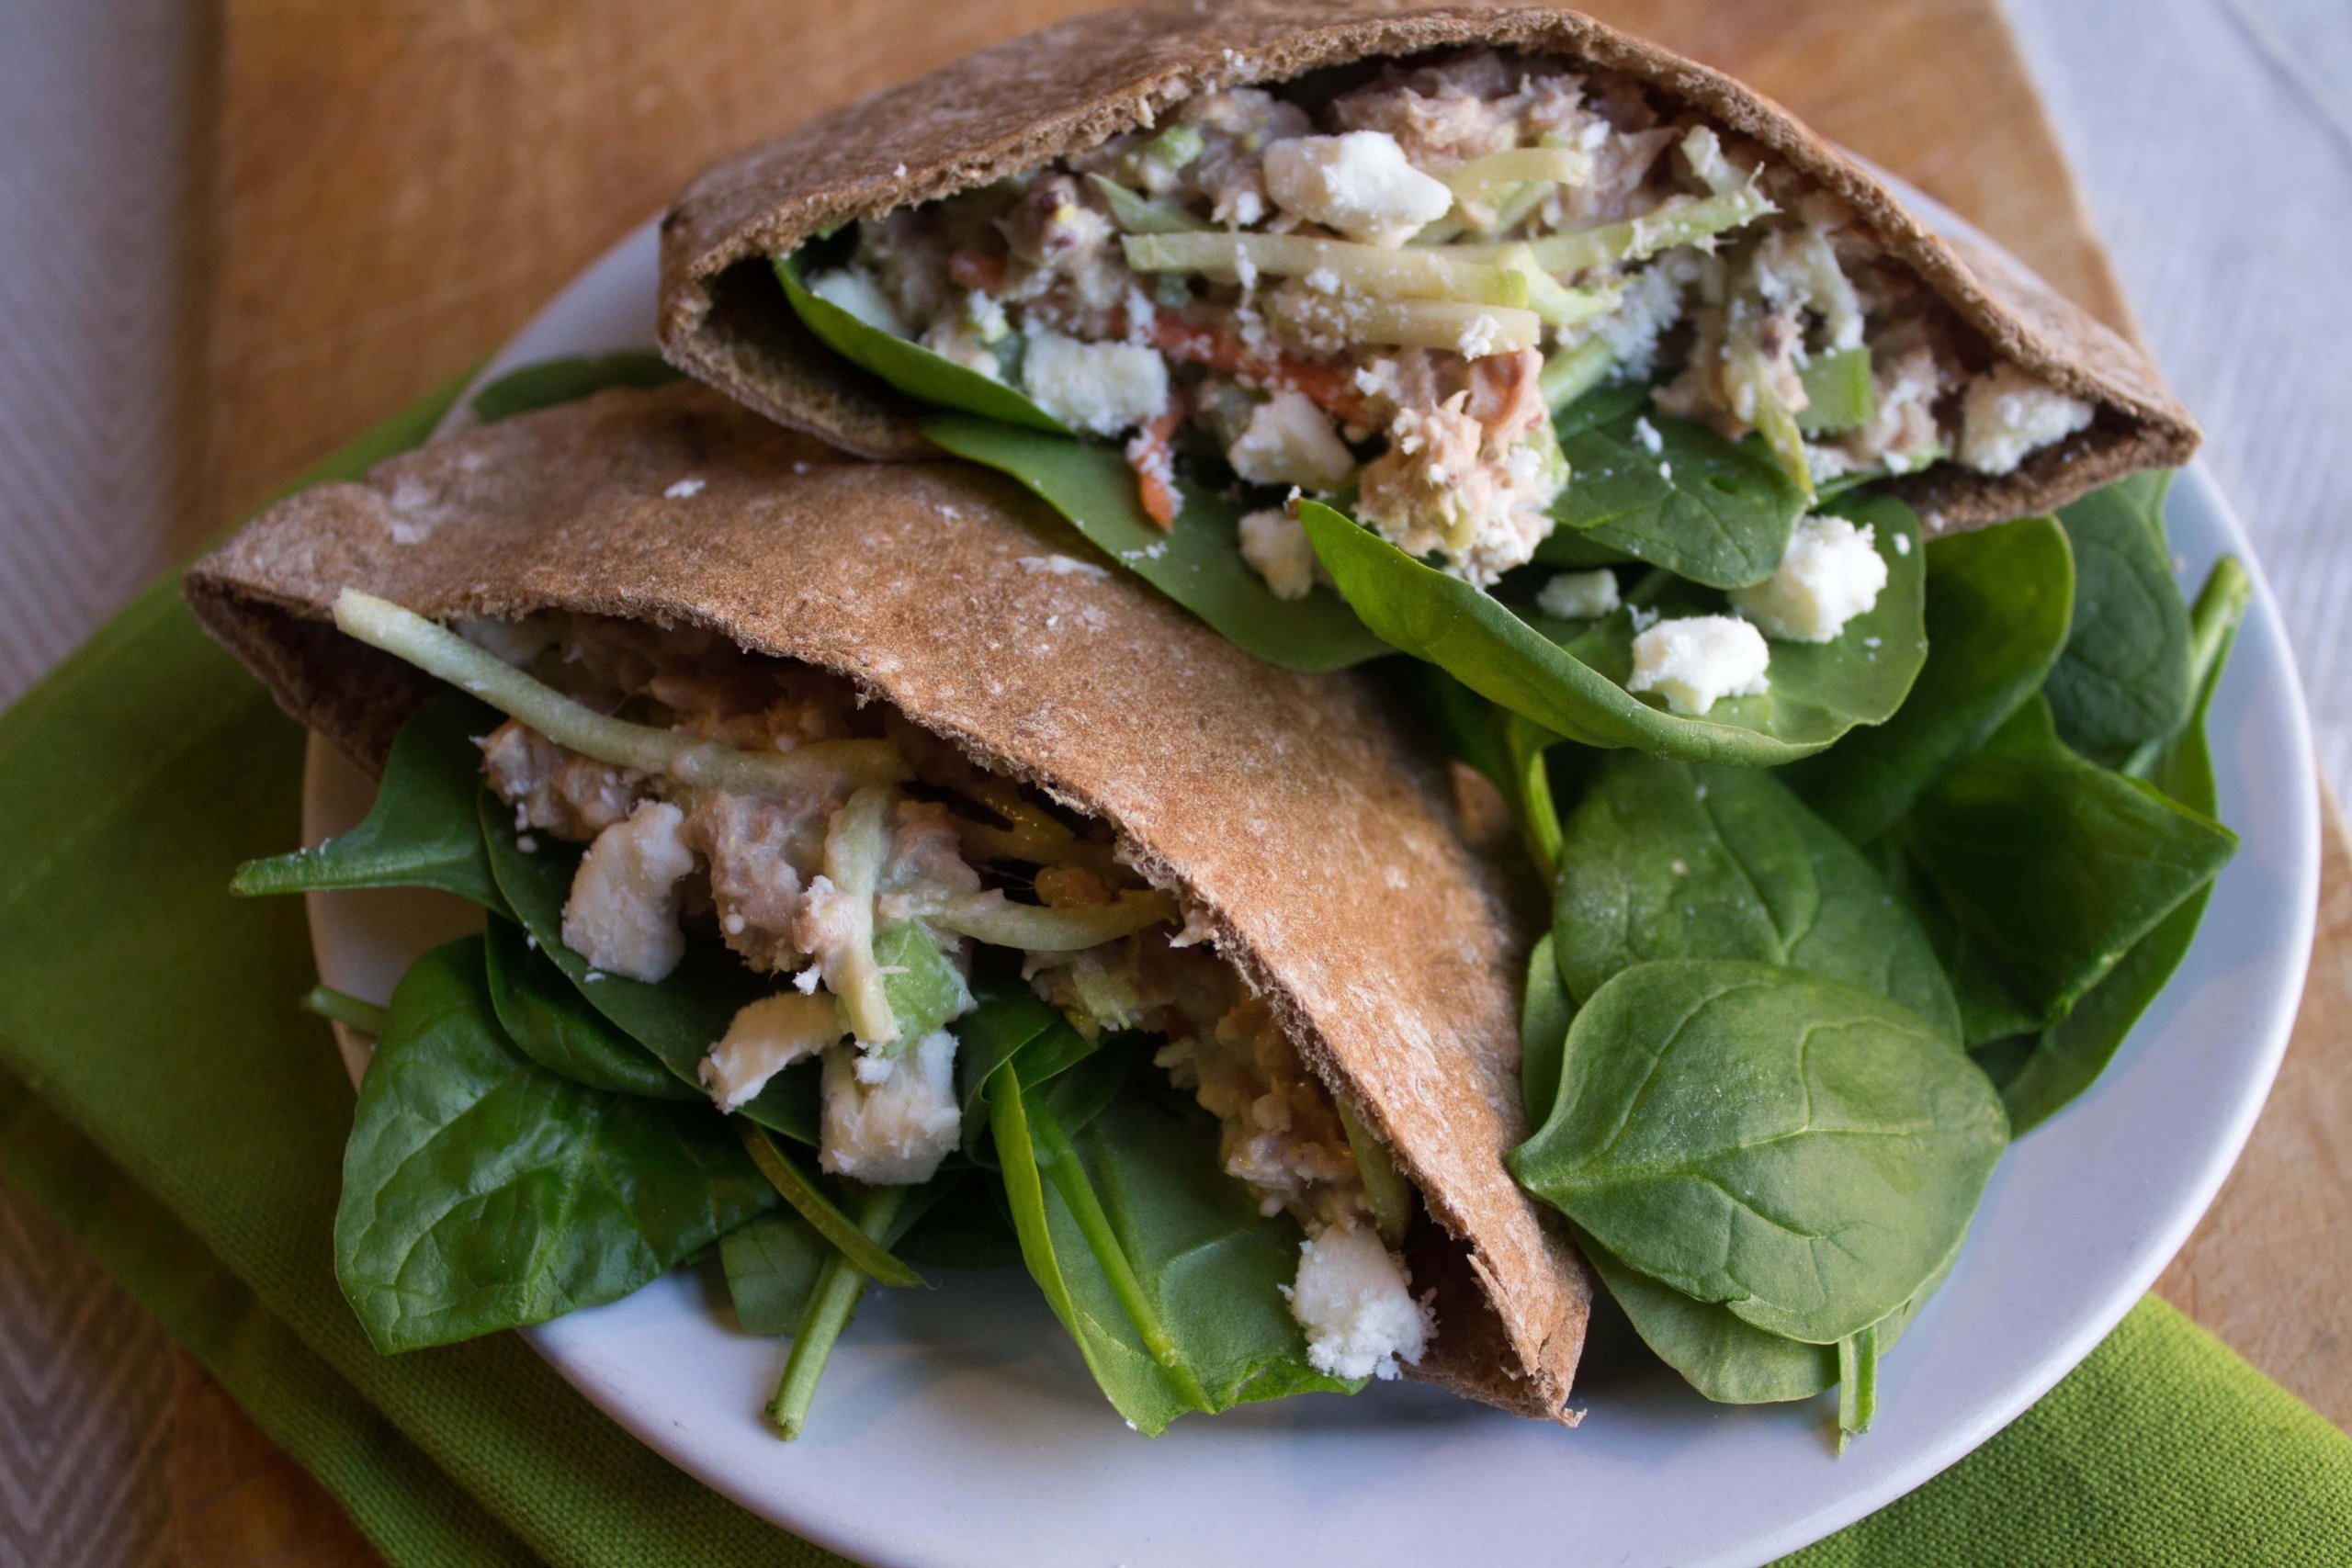 https://www.fannetasticfood.com/wp-content/uploads/2009/10/healthy-tuna-salad-scaled.jpg